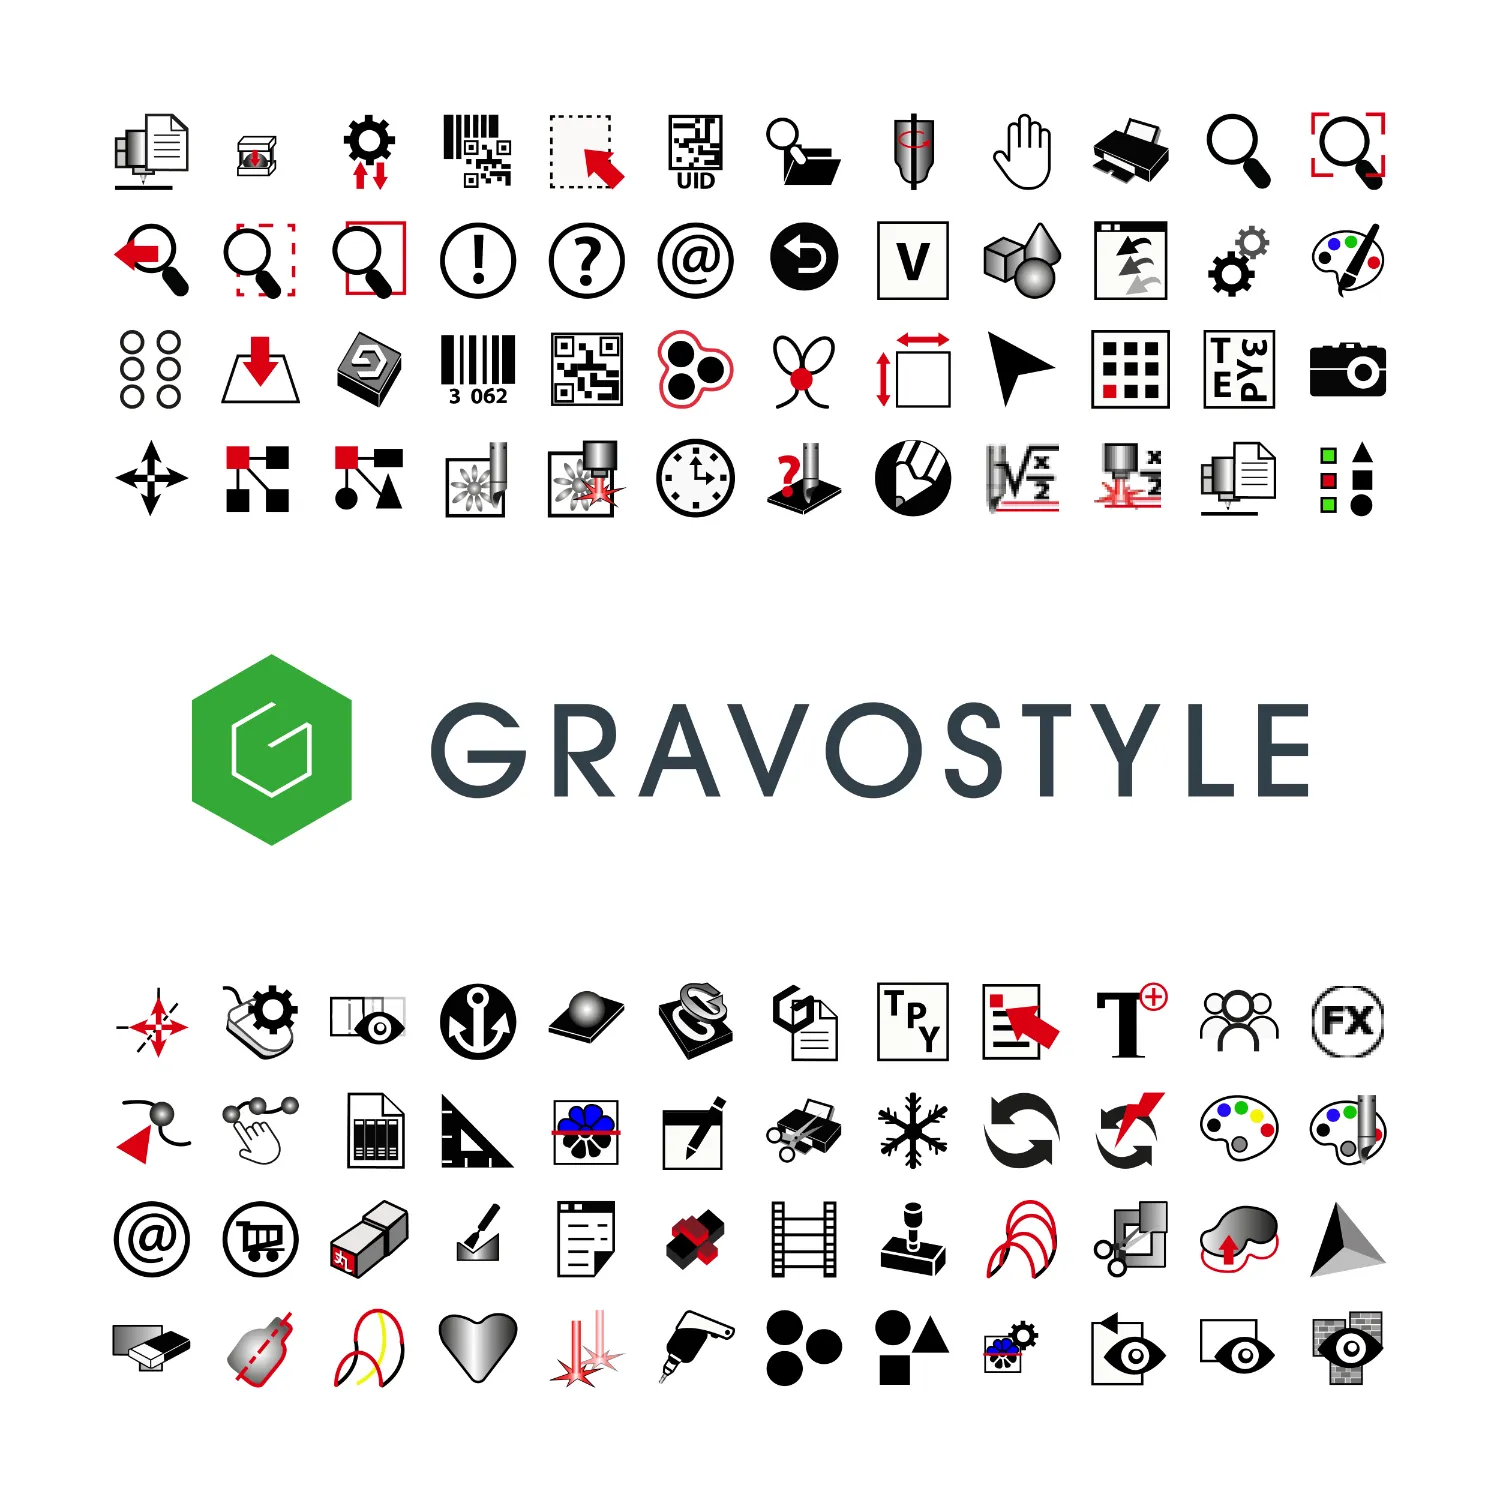 sof p gravostyle logo icones square 2